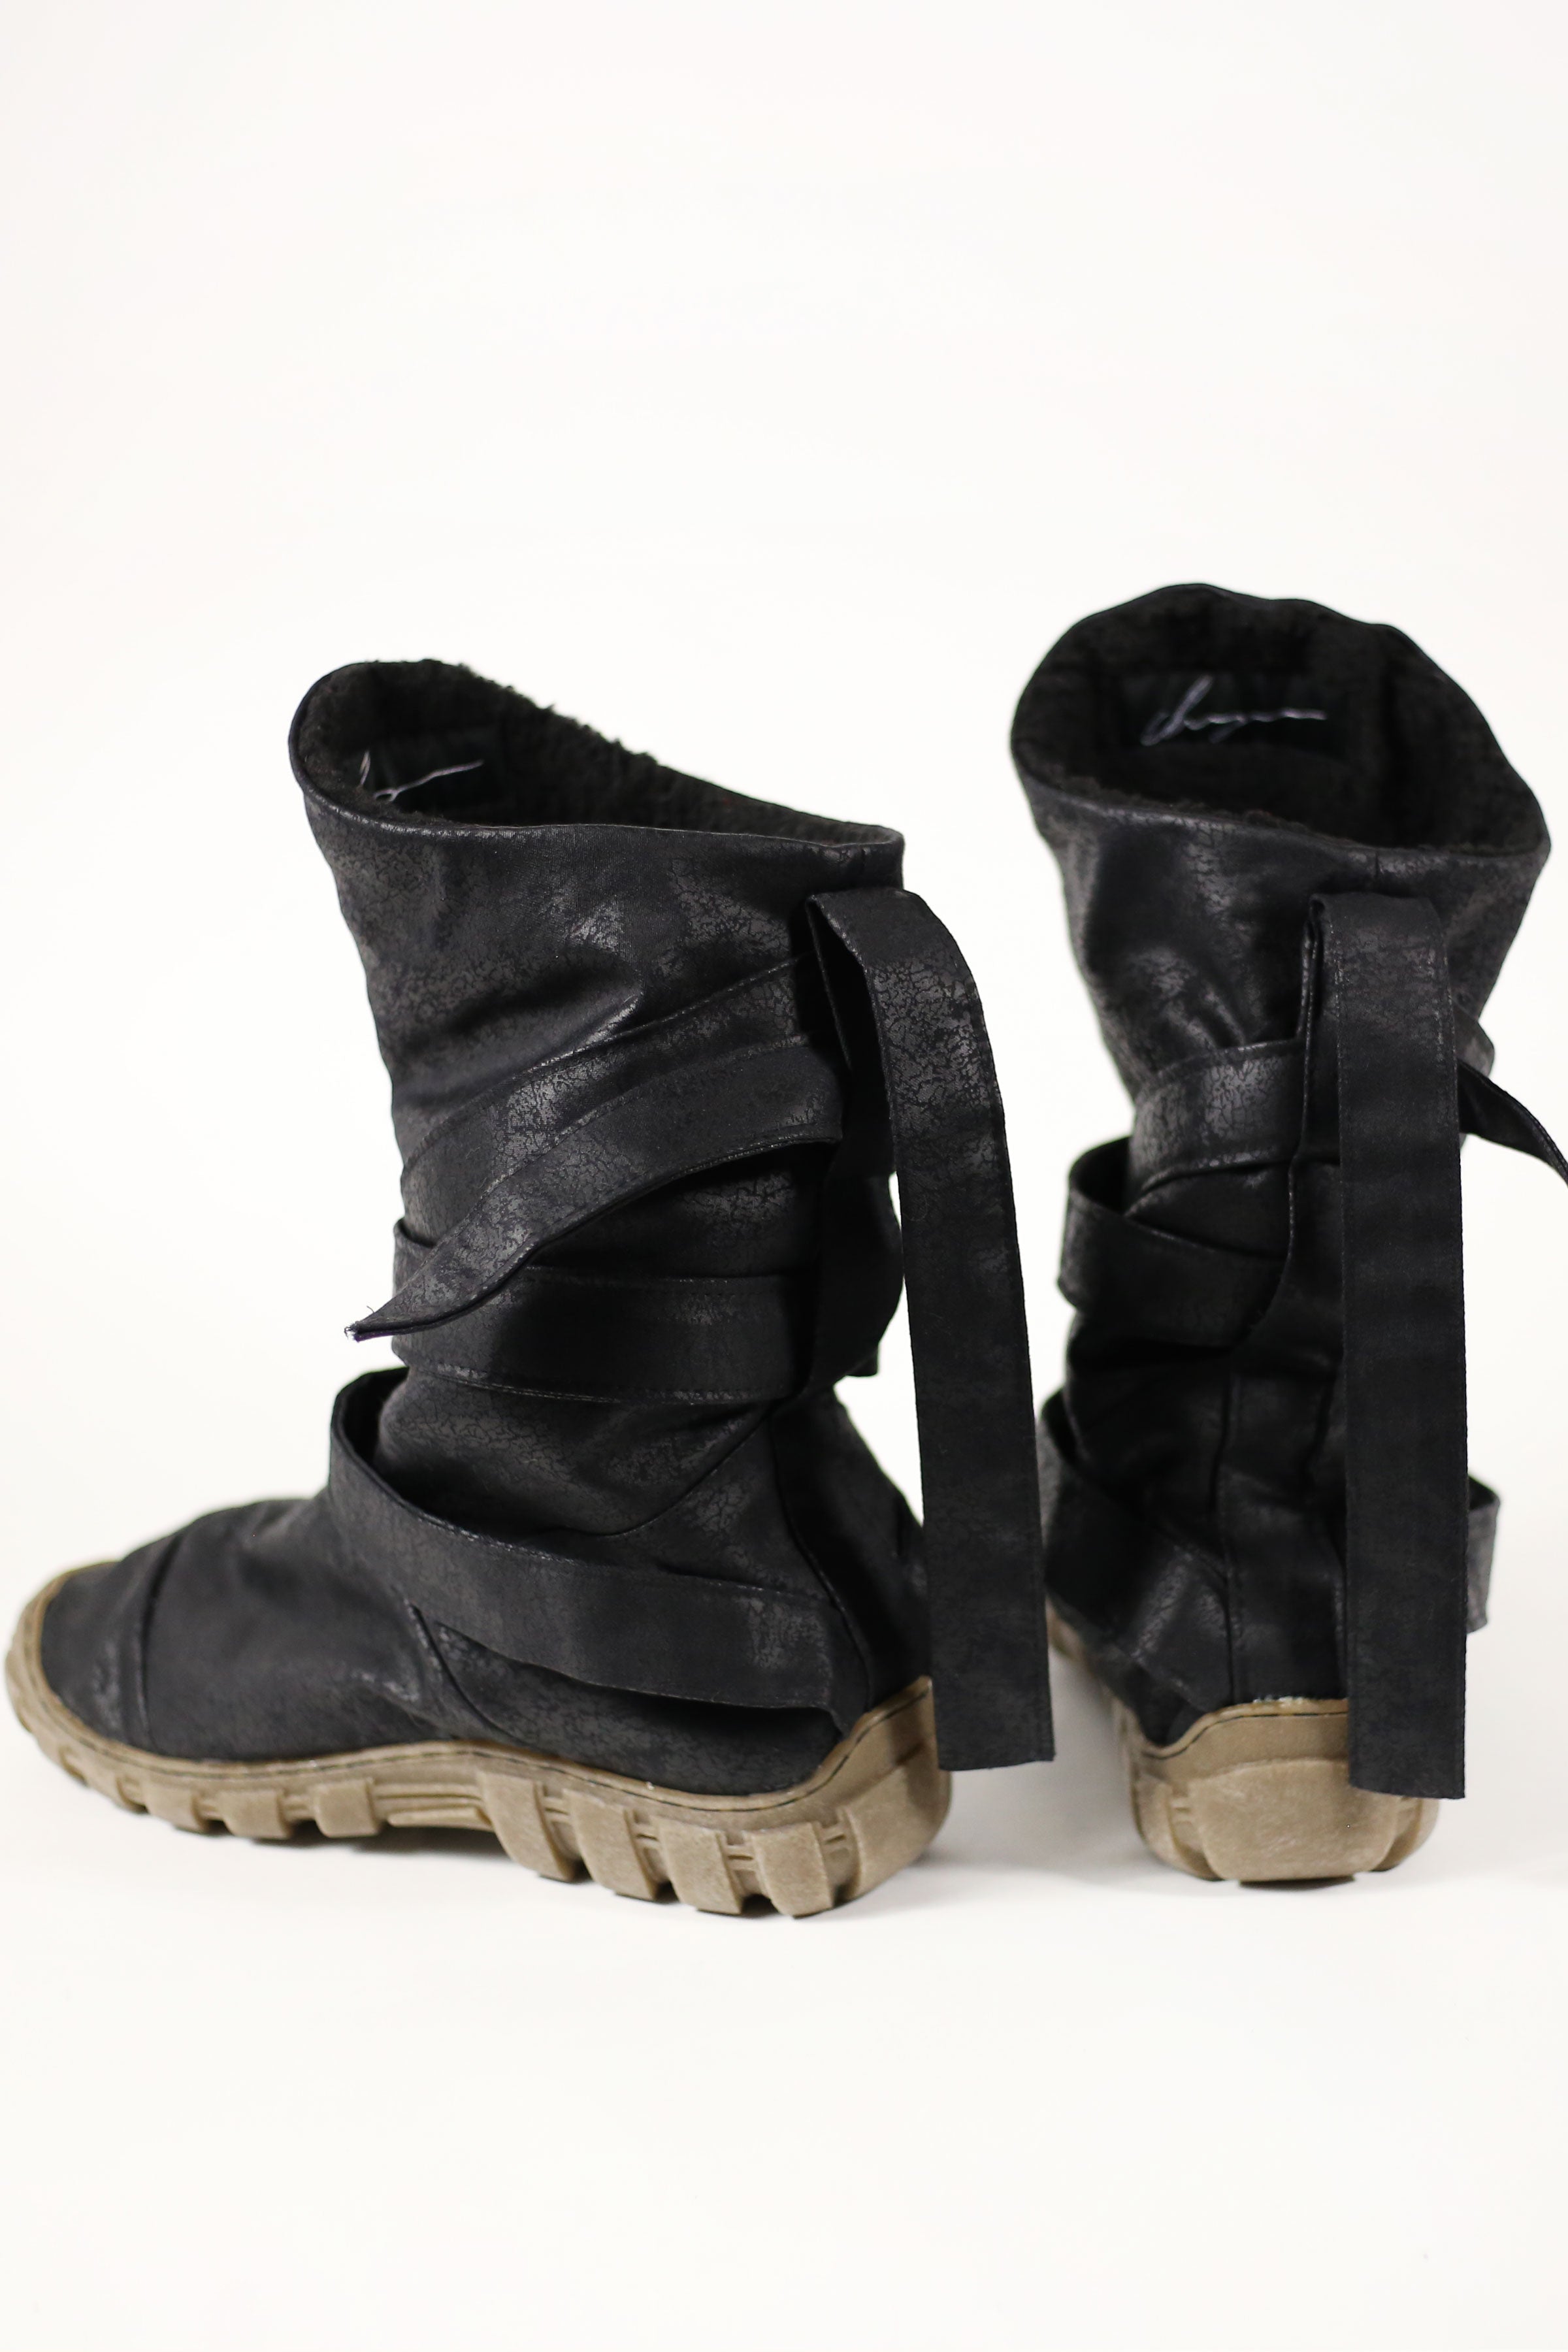 Guillaum Chaigne Strapped Boots V1.2